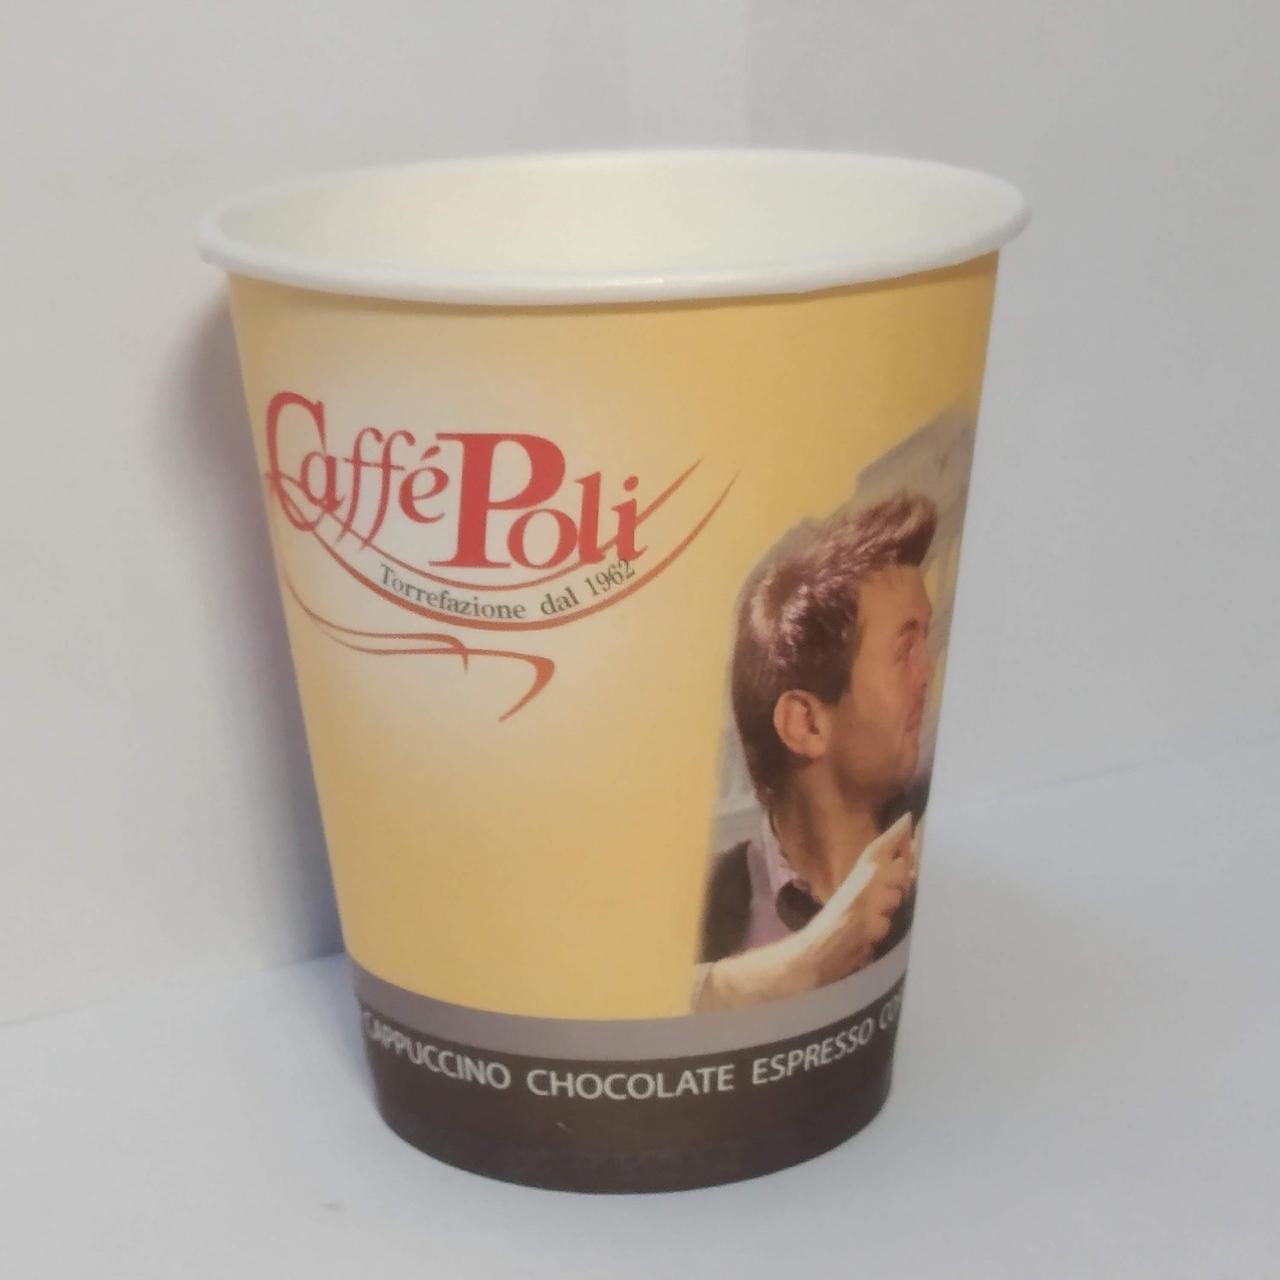 Стакан бумажный для вендинга "Caffe Poli" мальчик/девочка, 175 мл, диам.70 мм 1х50 шт. (60/1)